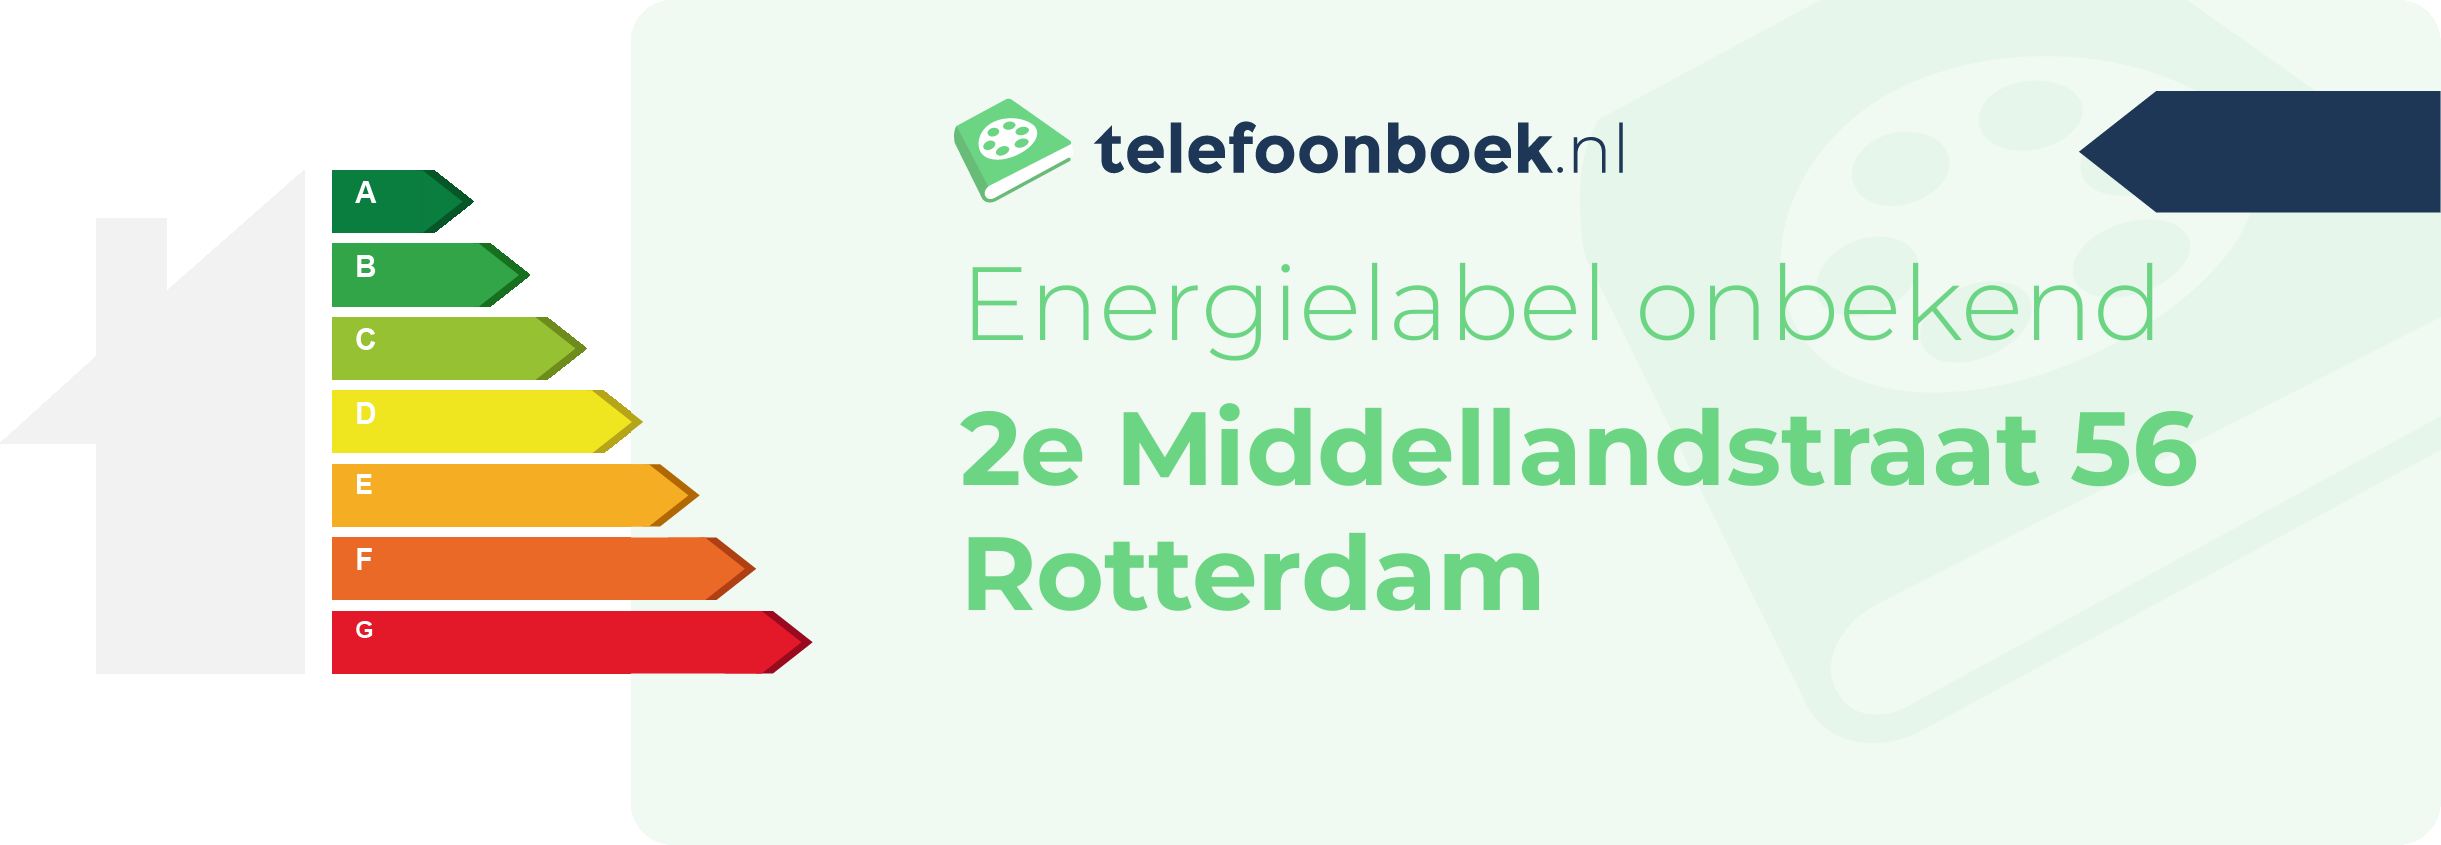 Energielabel 2e Middellandstraat 56 Rotterdam